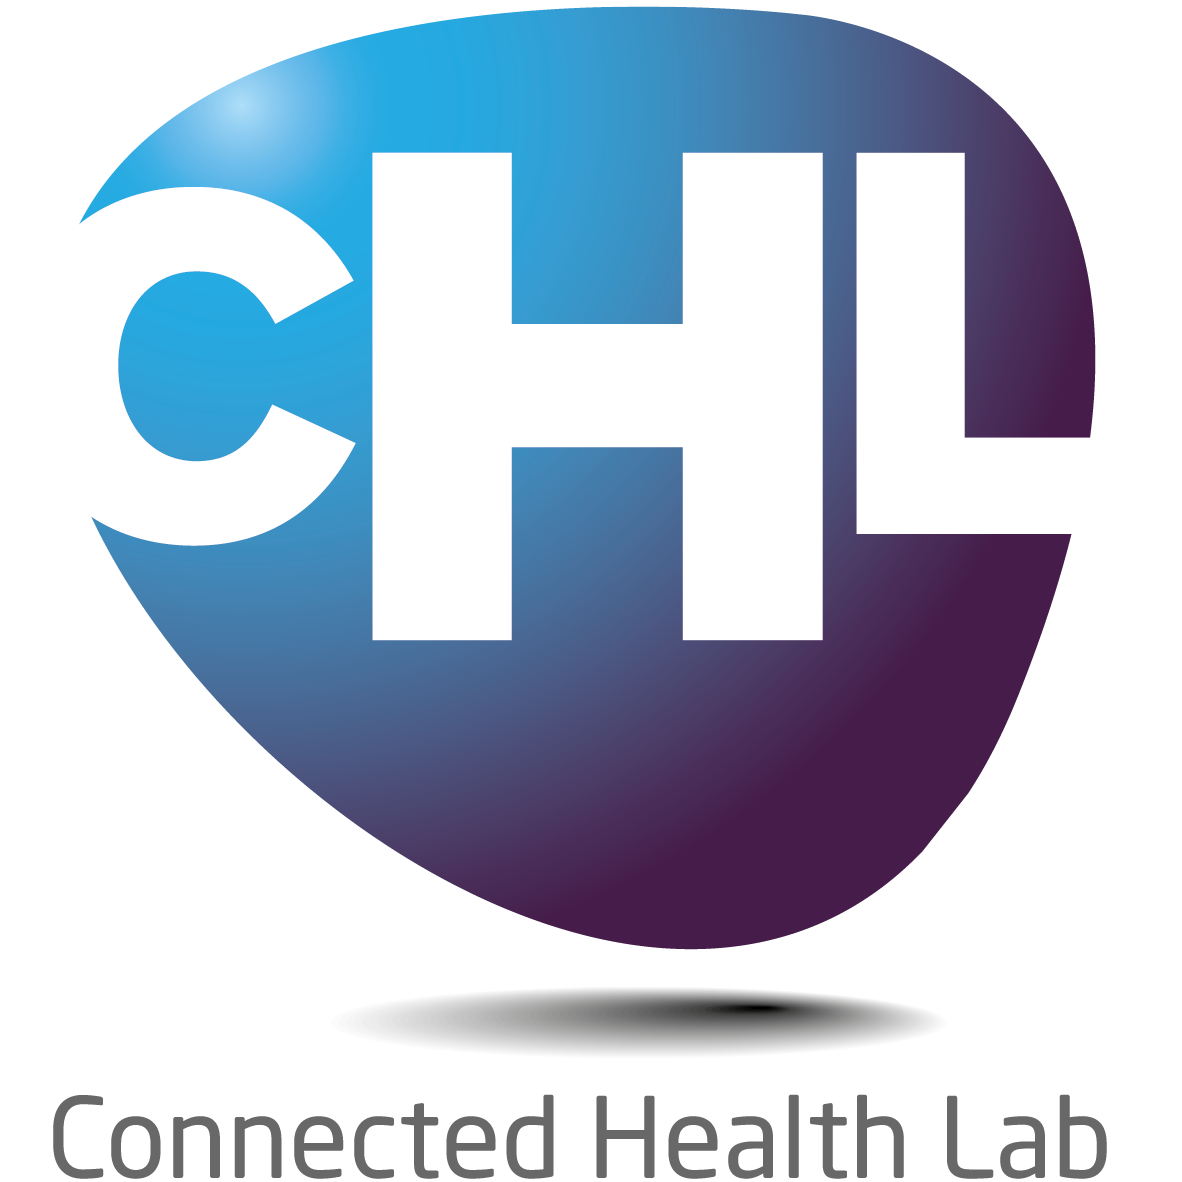 Logo CHL